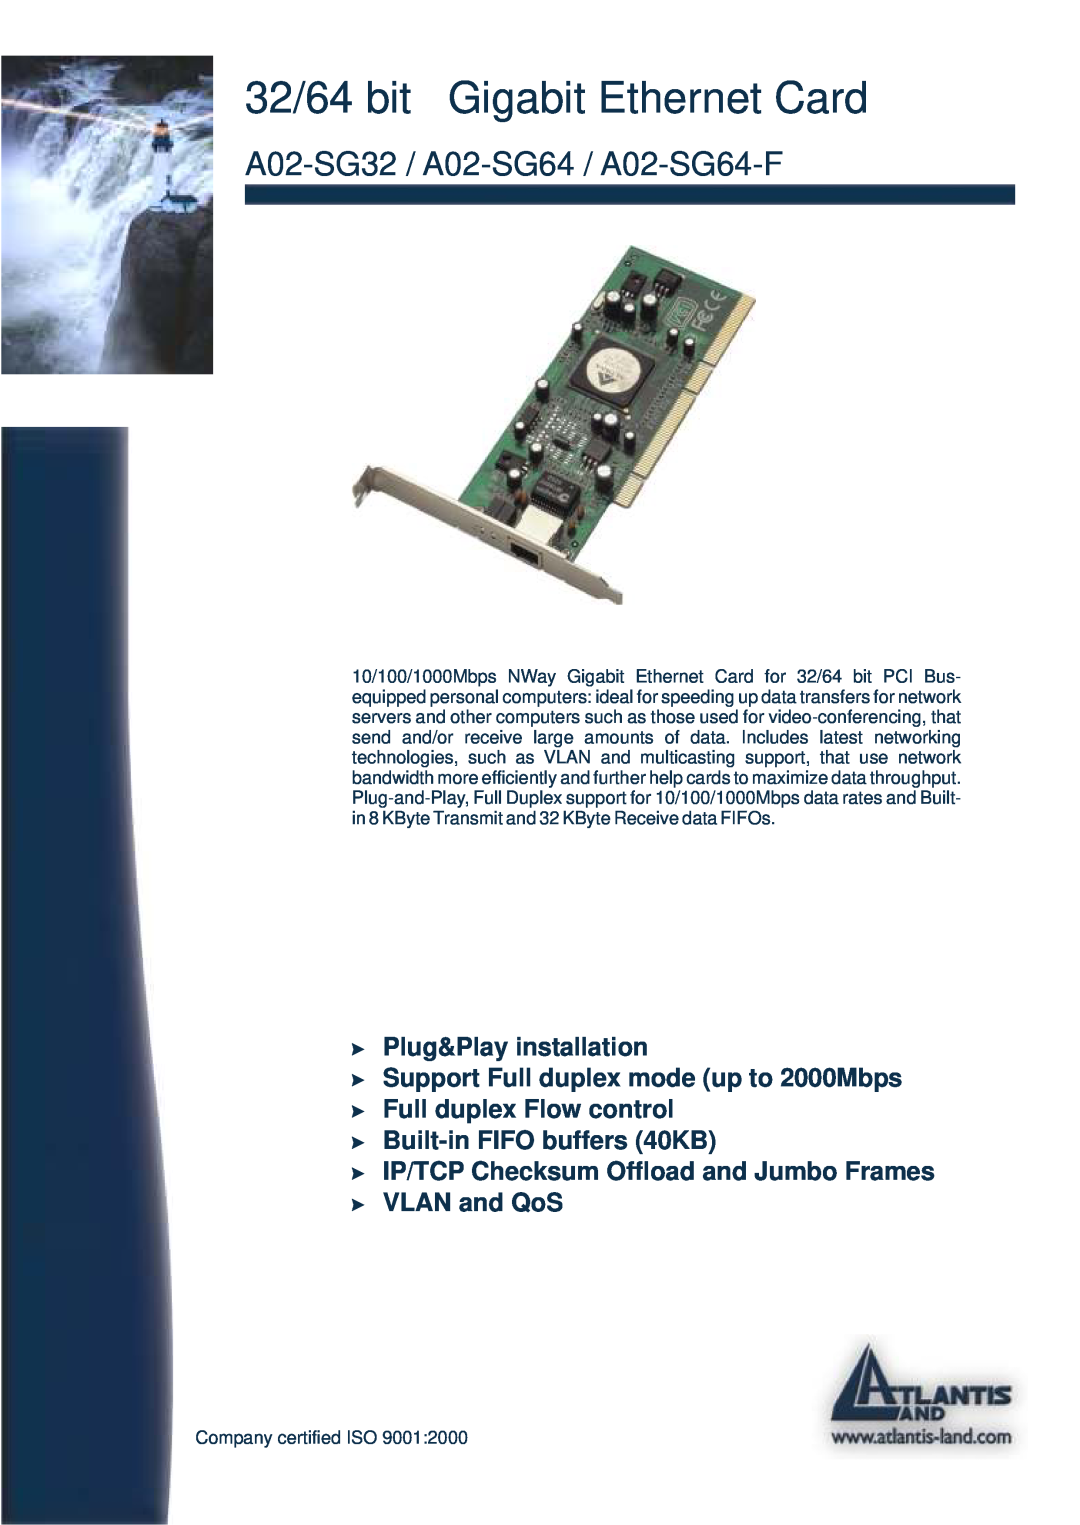 Atlantis Land manual A02-SG32 / A02-SG64 / A02-SG64-F, 32/64 bit Gigabit Ethernet Card 